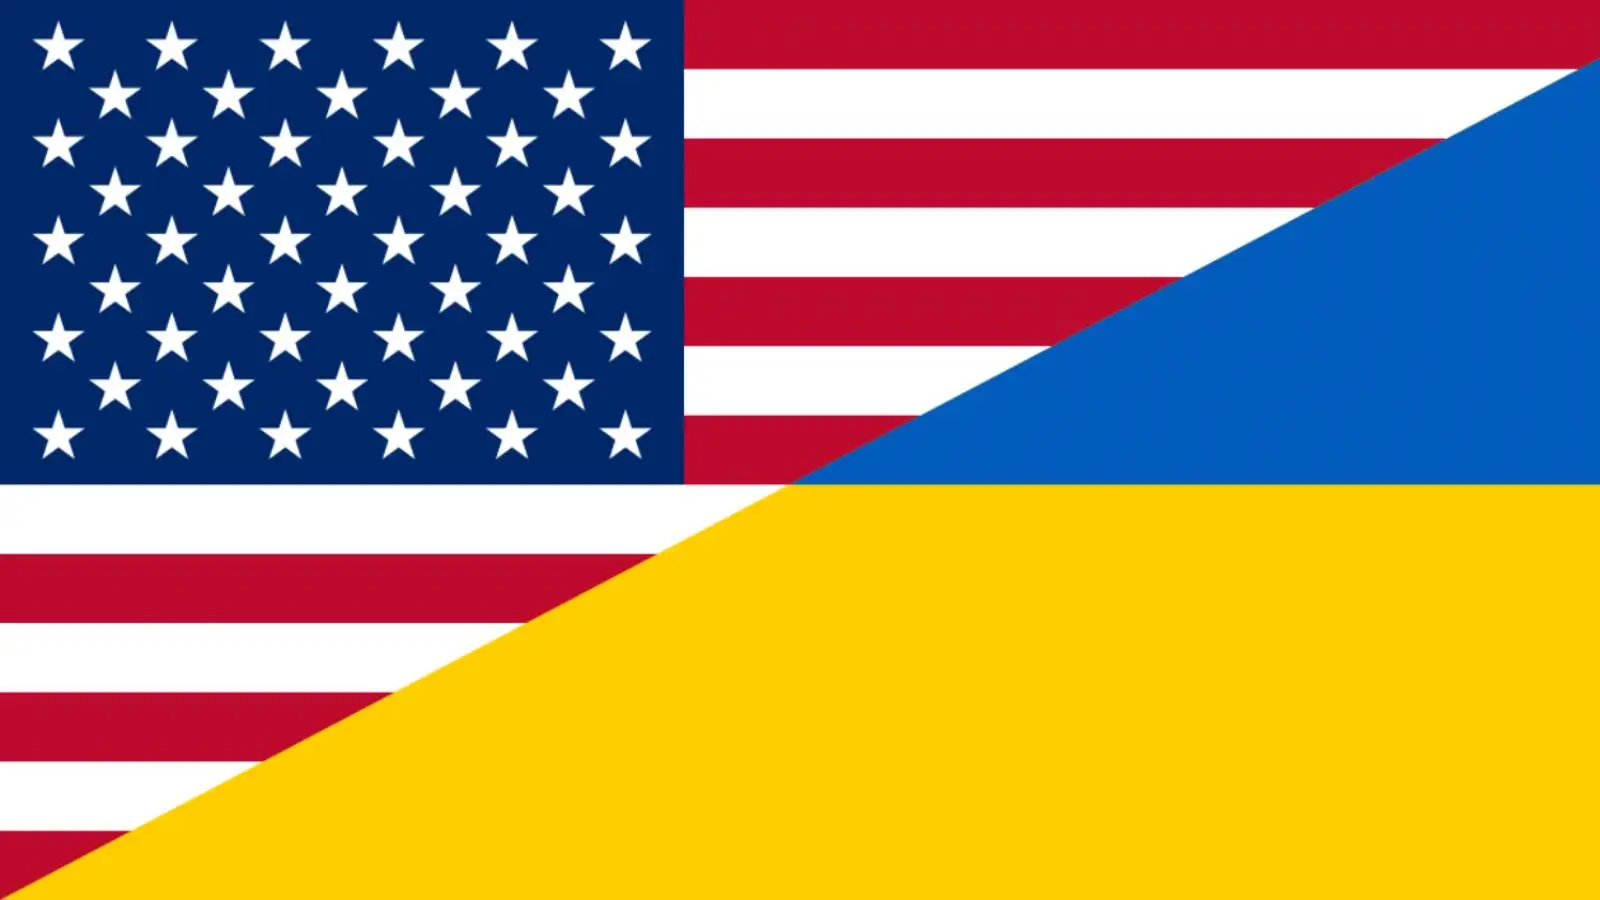 SUA a fost Surprinsa de Decizia Ucrainei de a cere Aderarea la NATO